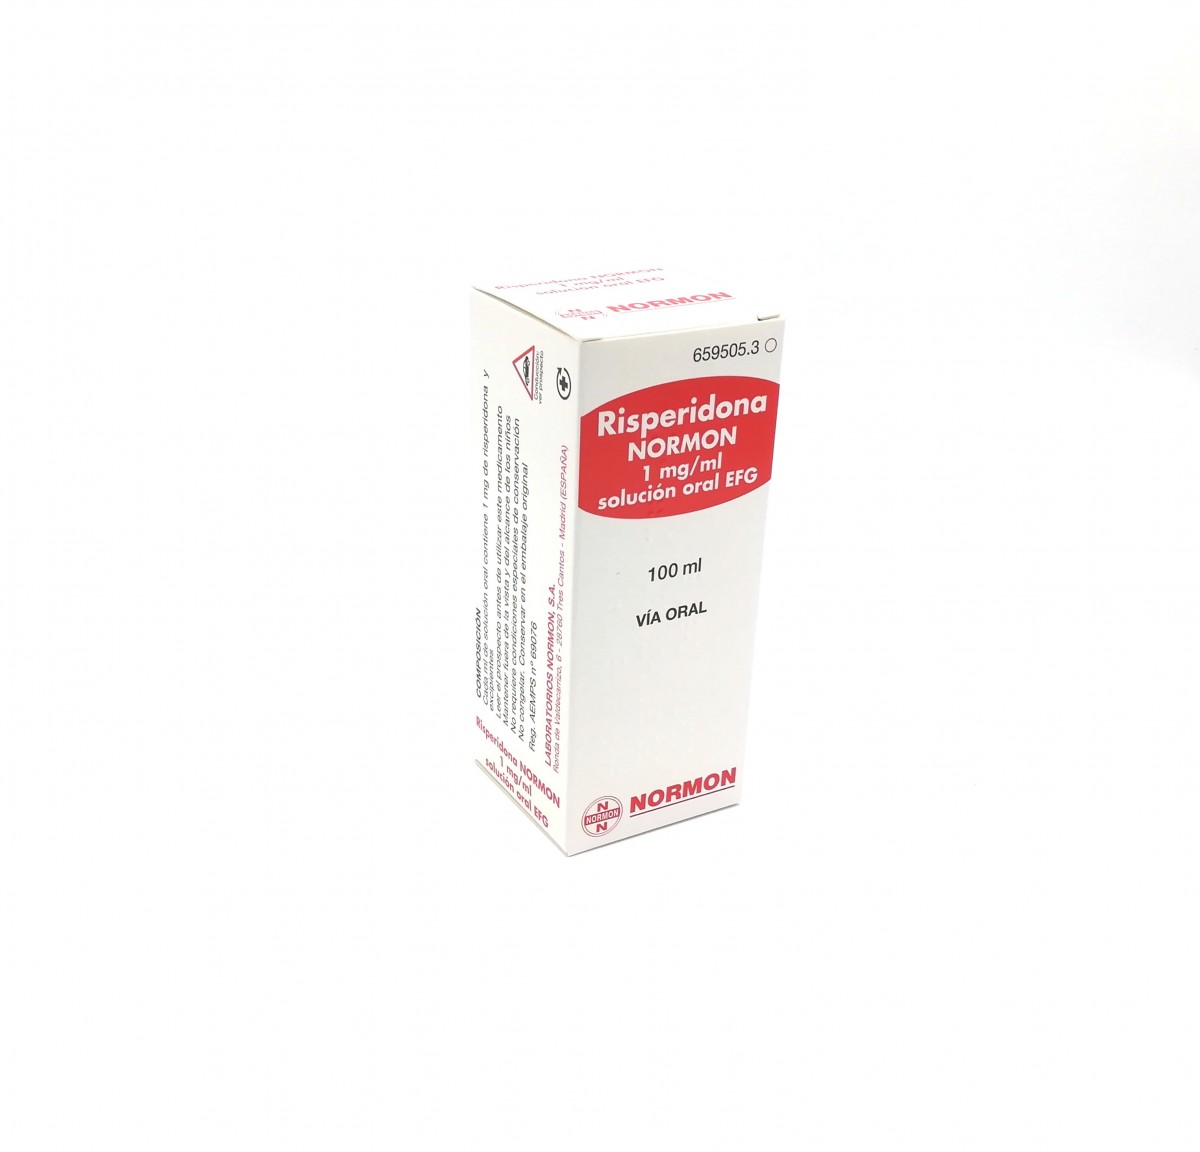 RISPERIDONA NORMON 1 mg/ml SOLUCION ORAL EFG, 1 frasco de 100 ml fotografía del envase.